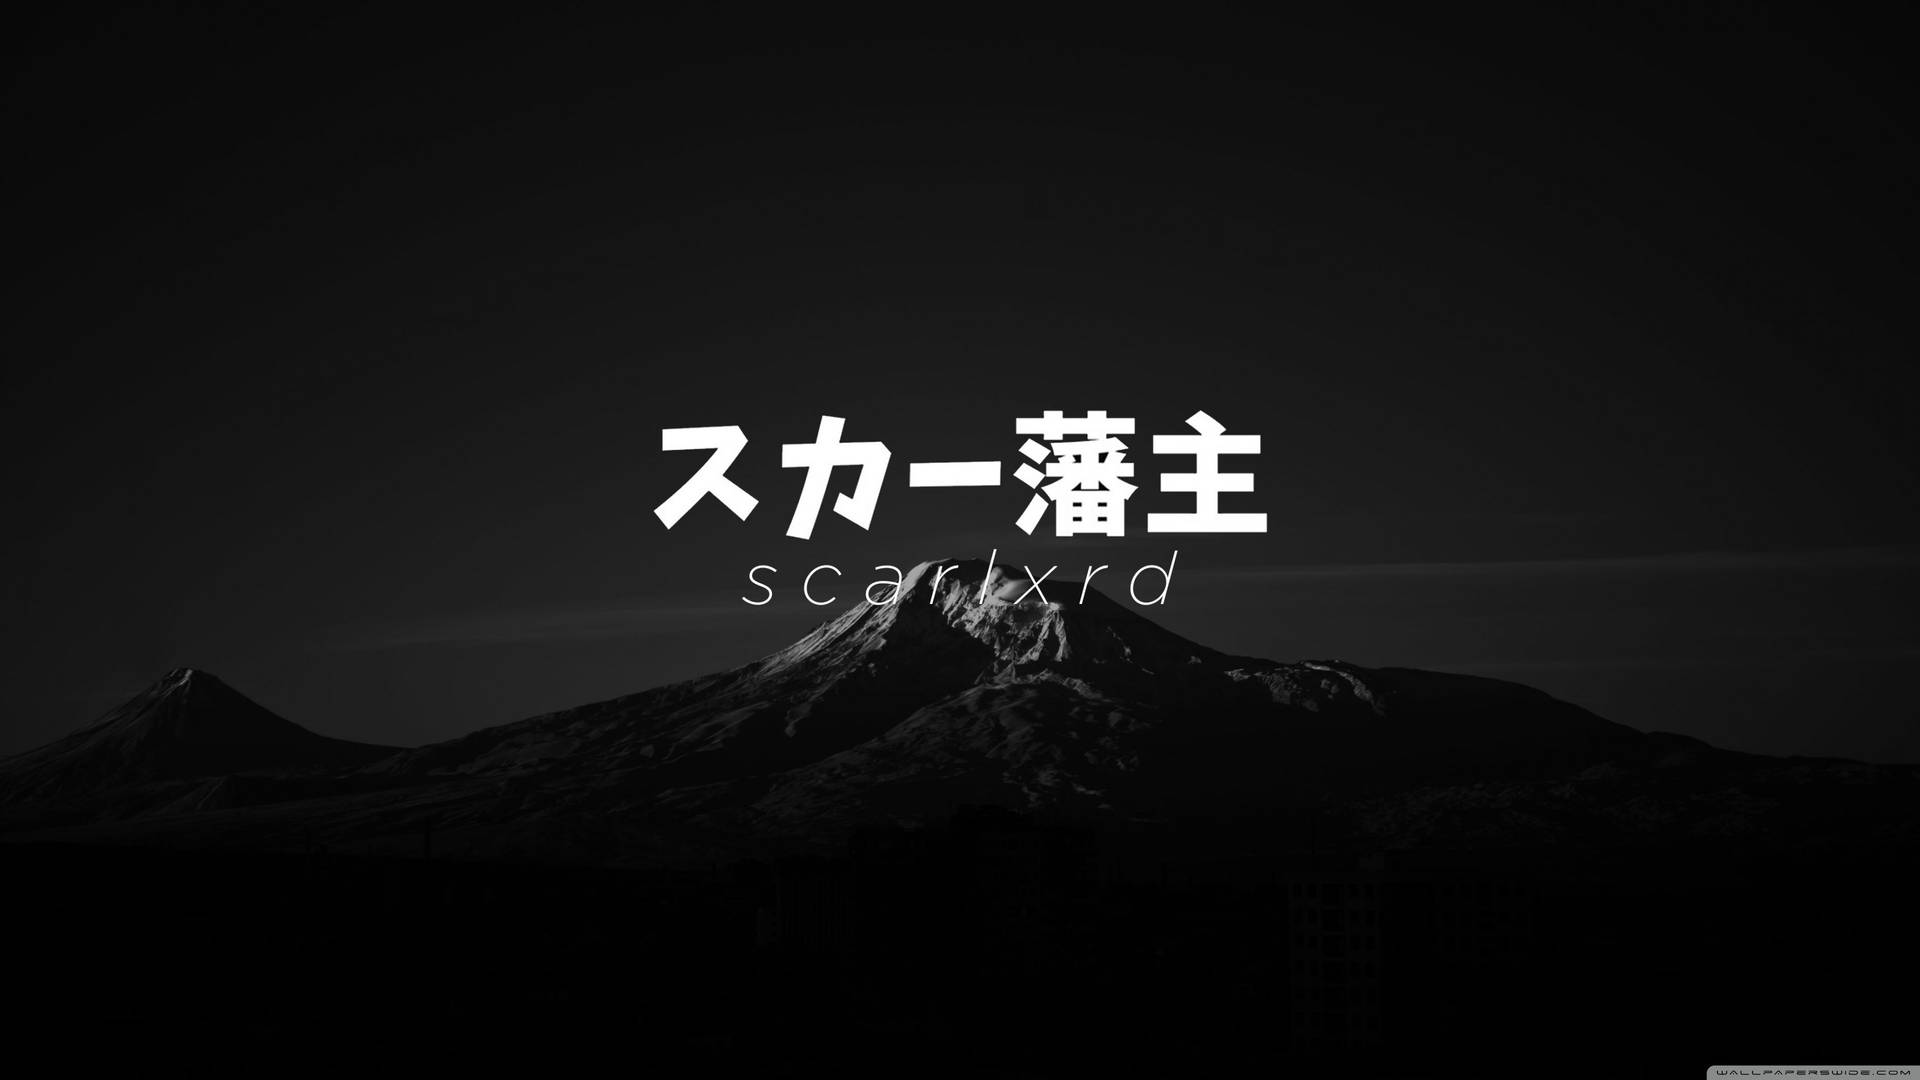 Scarlxrdmonte Fuji. Fondo de pantalla